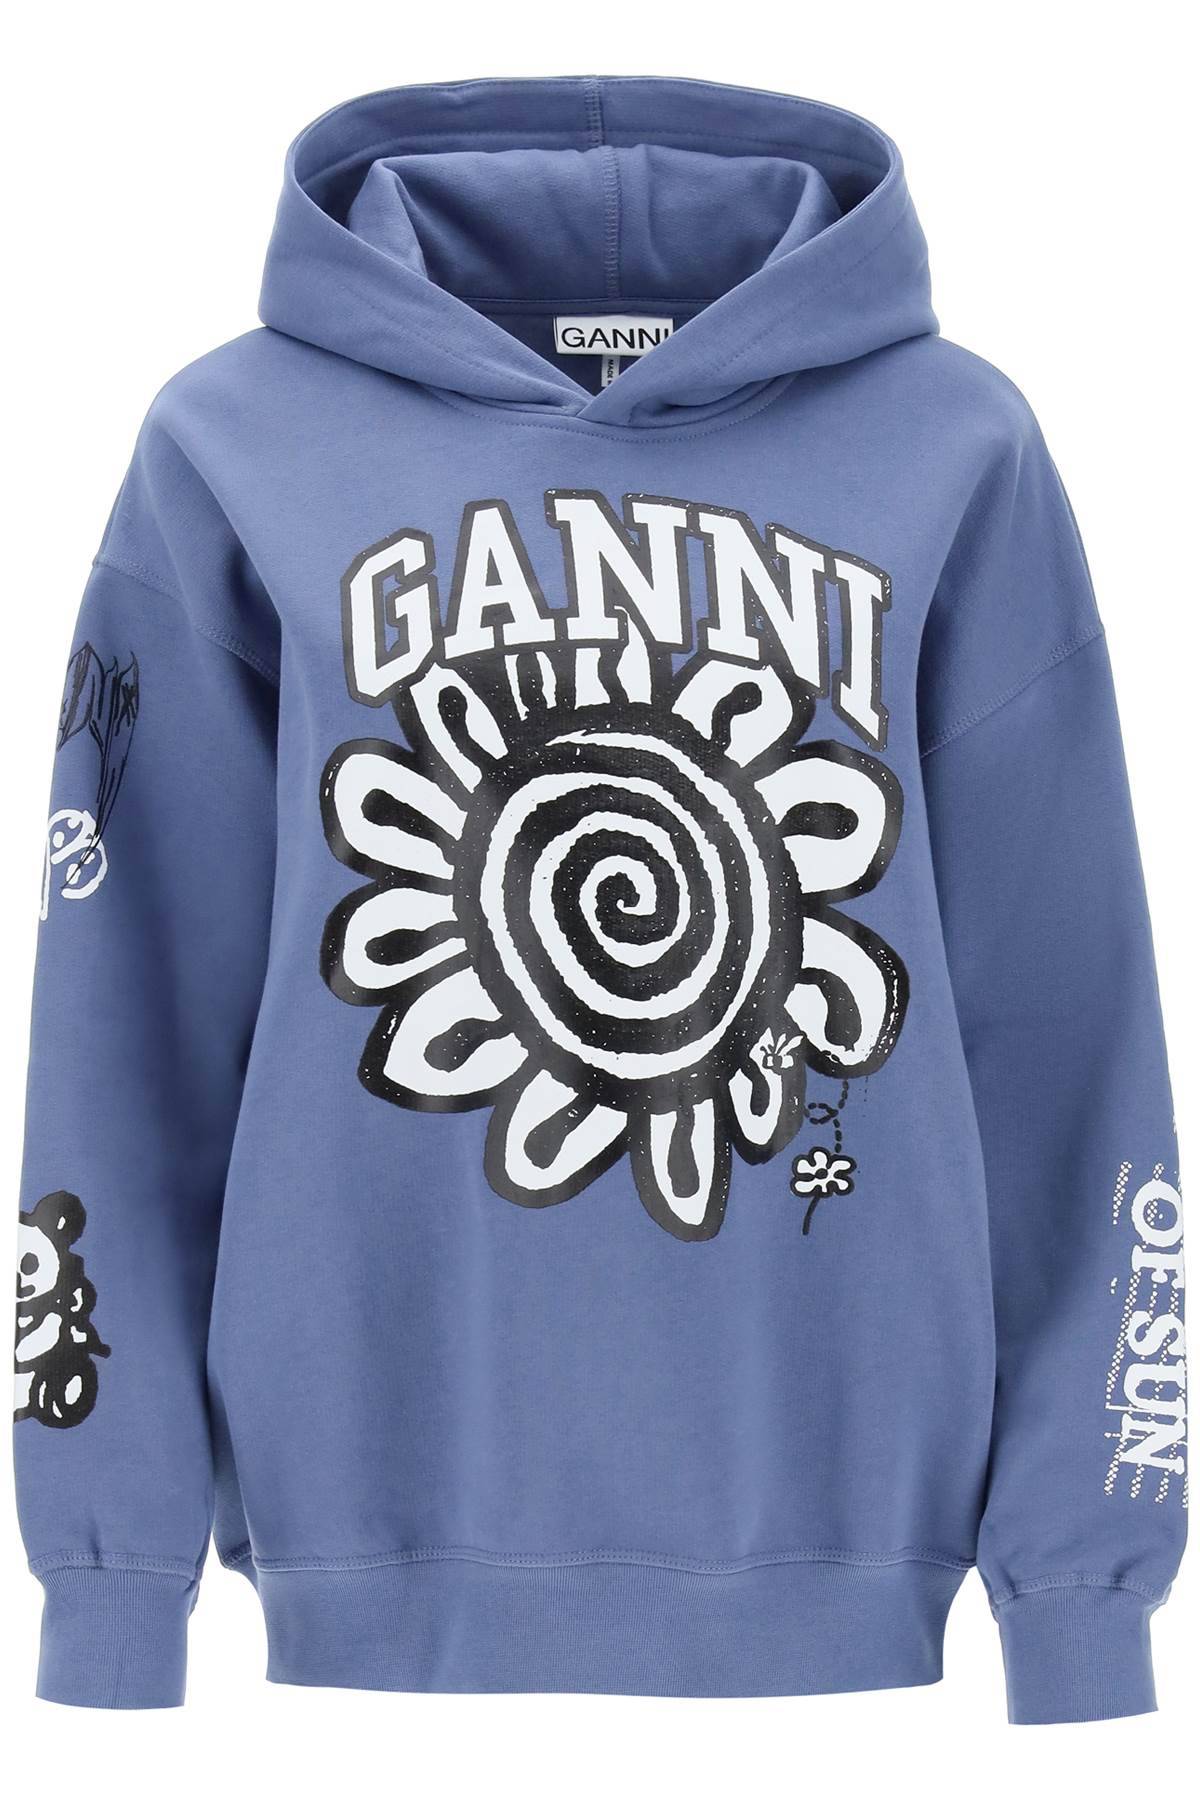 Ganni GANNI hoodie with graphic prints